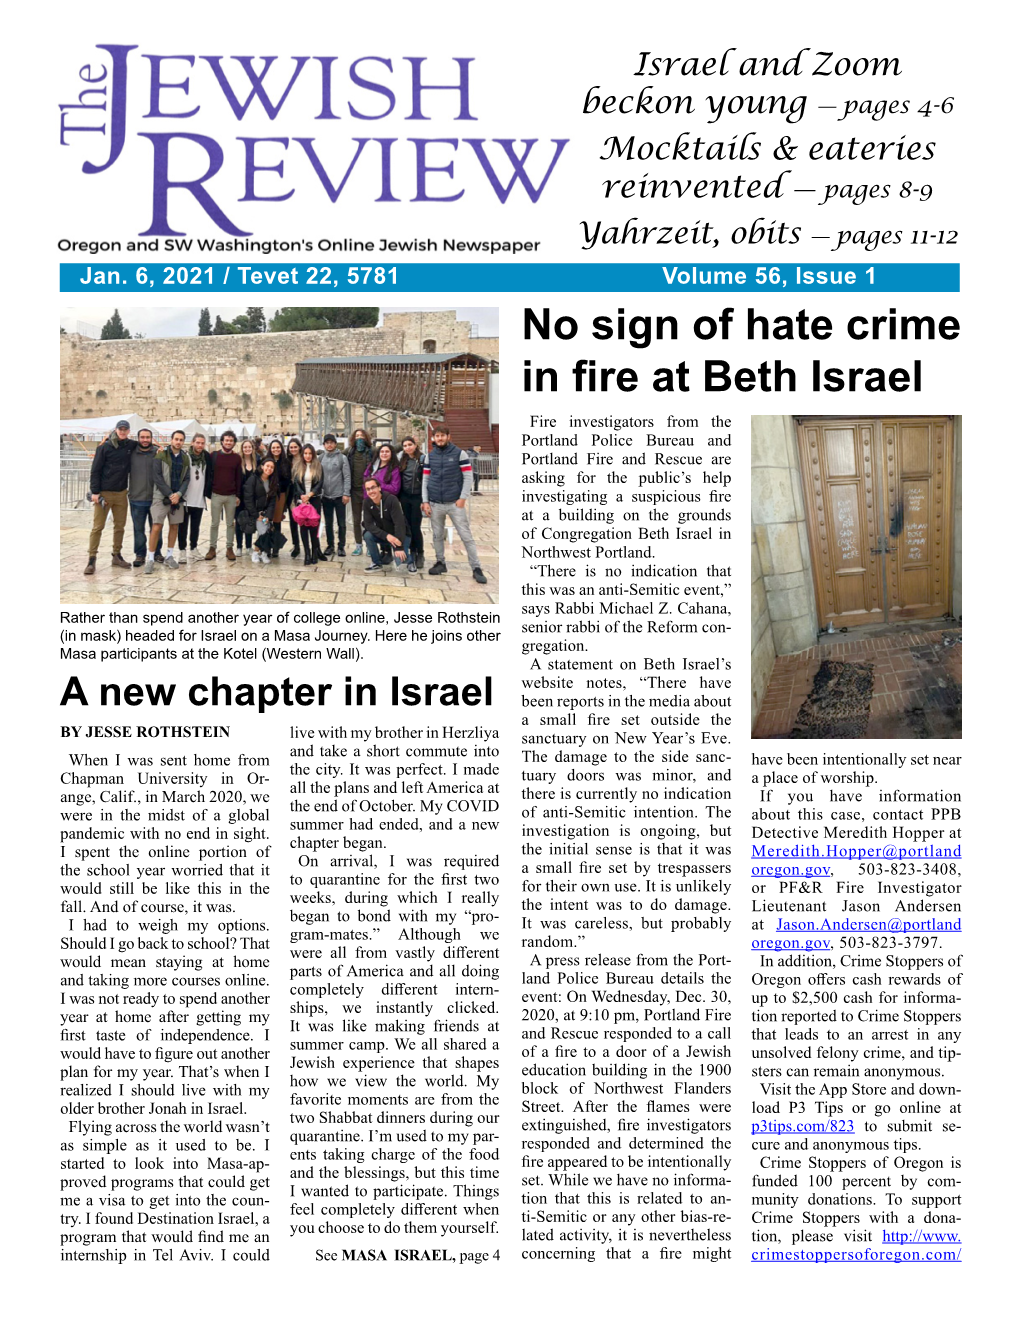 Jewish Review Jan